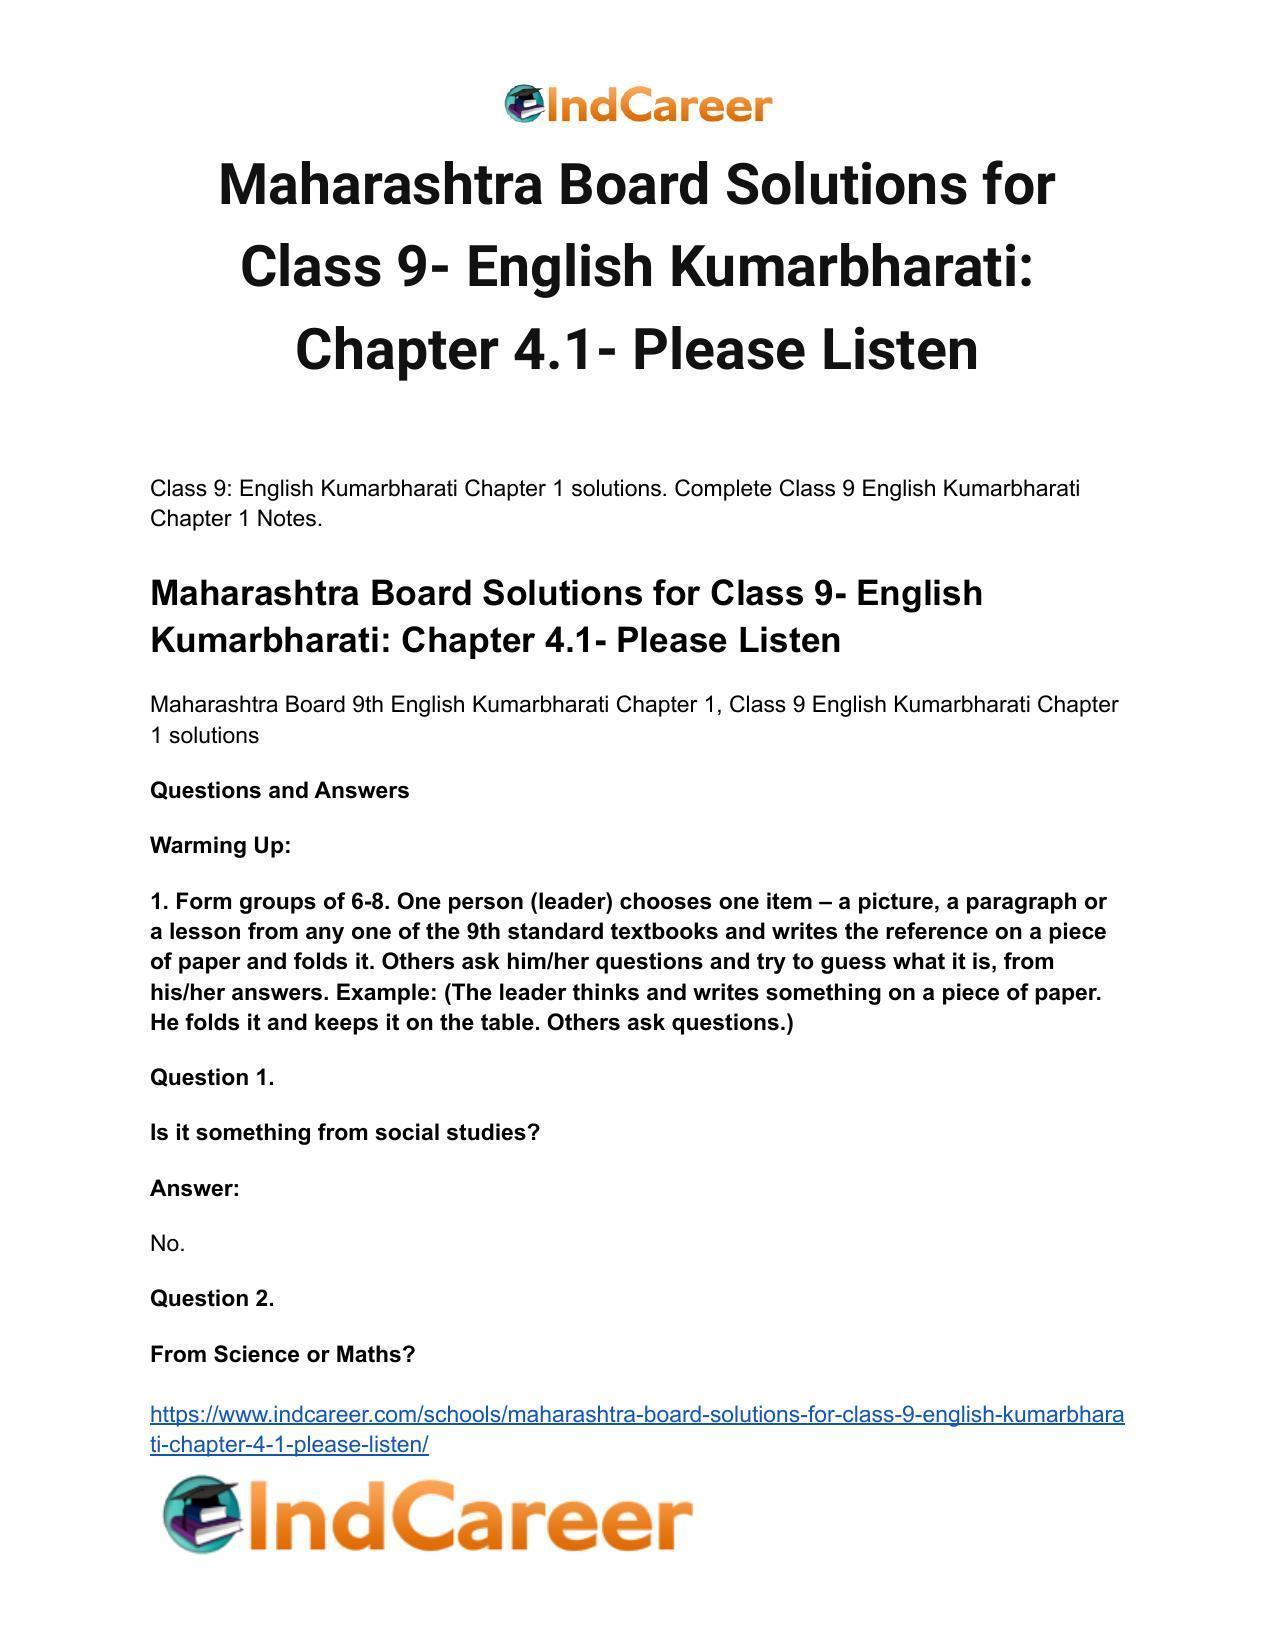 Maharashtra Board Solutions for Class 9- English Kumarbharati: Chapter 4.1- Please Listen - Page 2